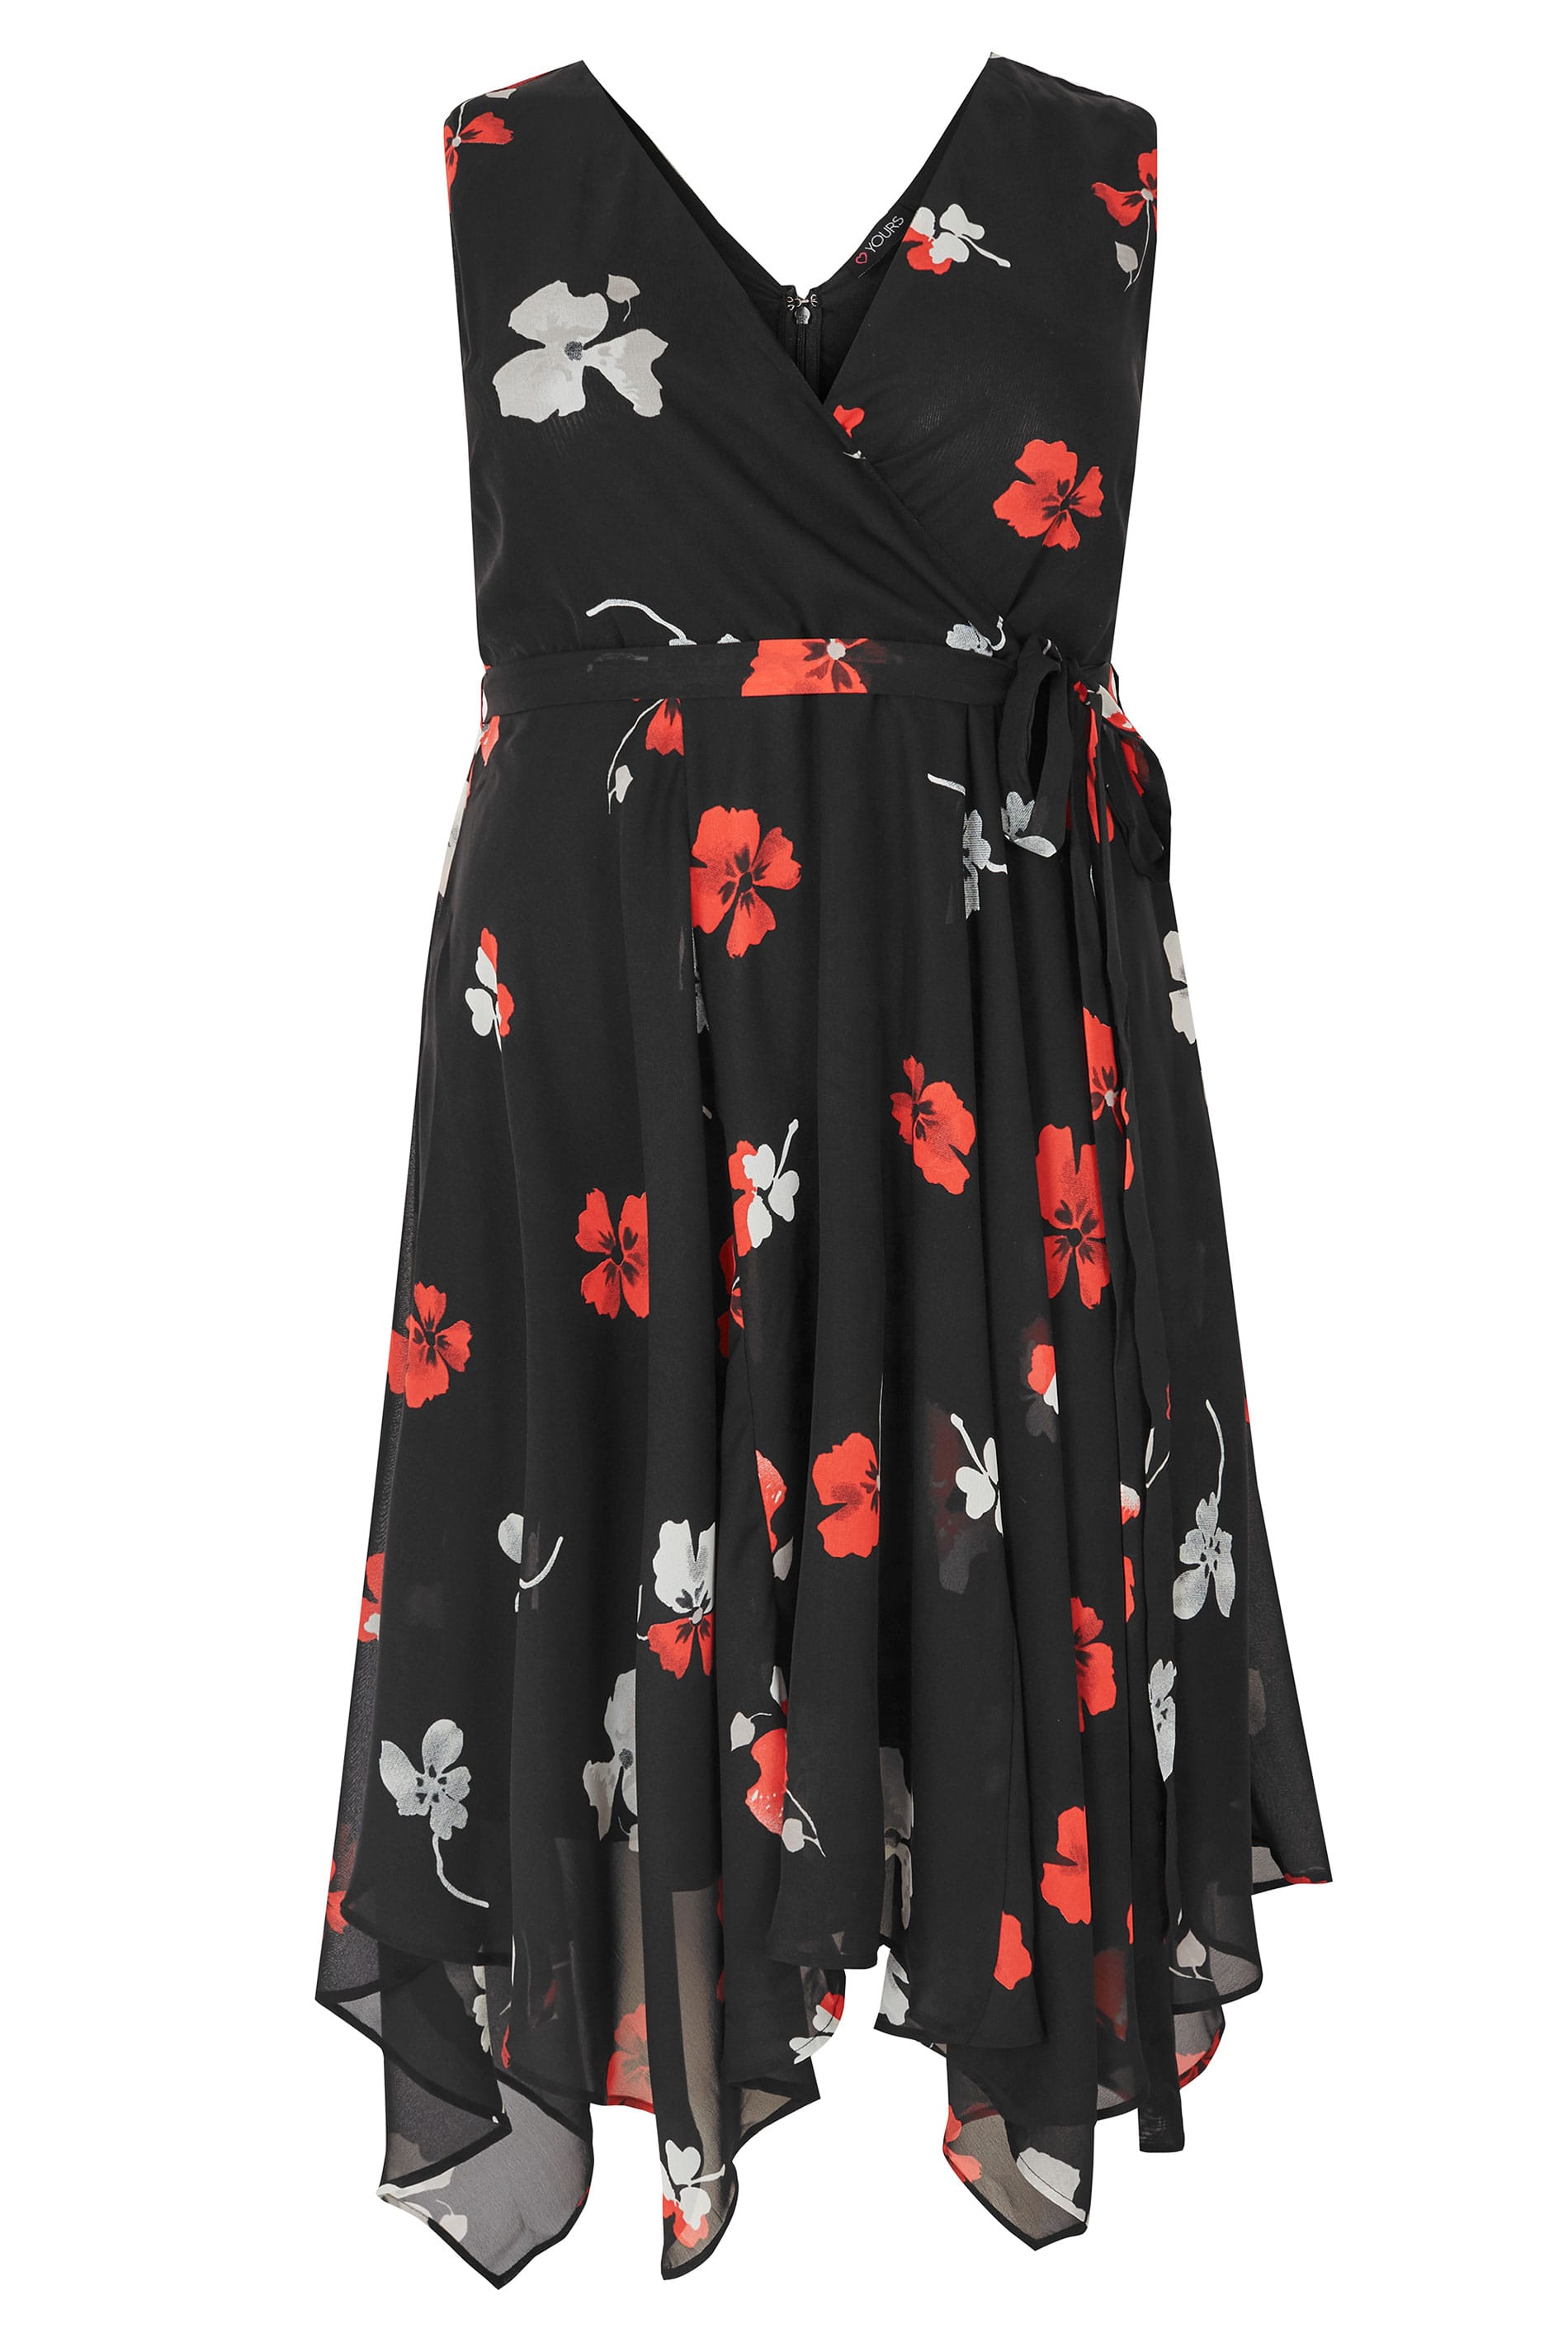 Black Floral Print Wrap Dress With Hanky Hem, plus size 16 to 36 ...